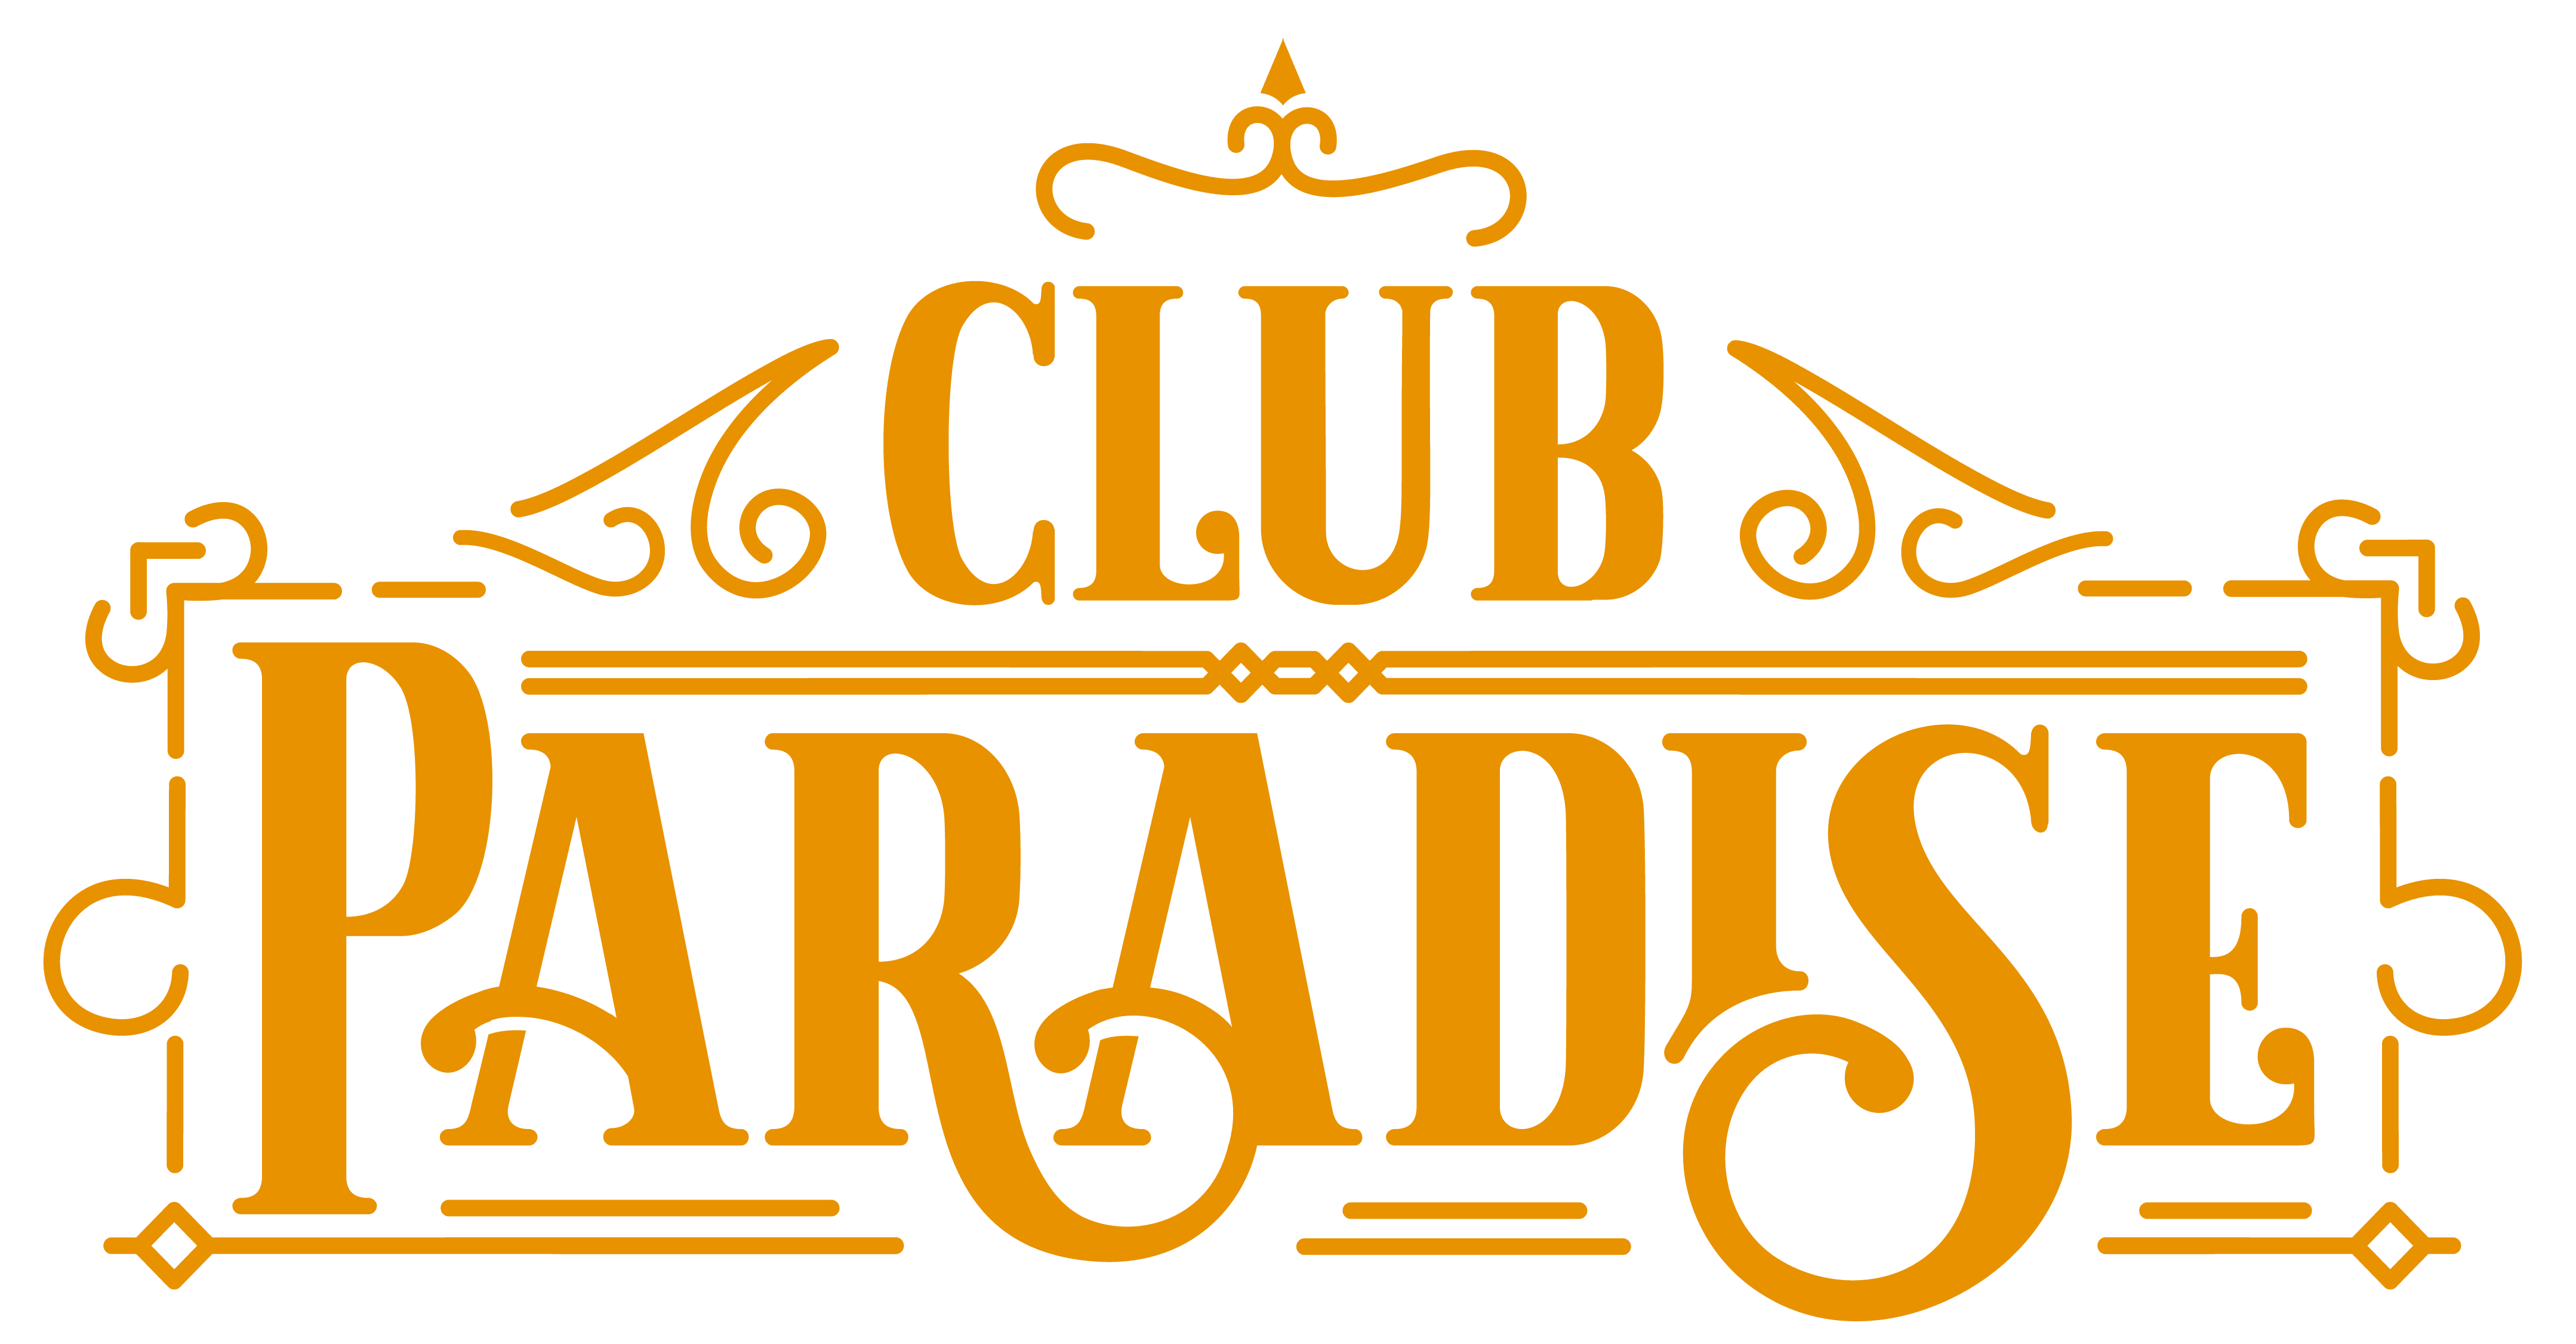 Club paradise amsterdam review